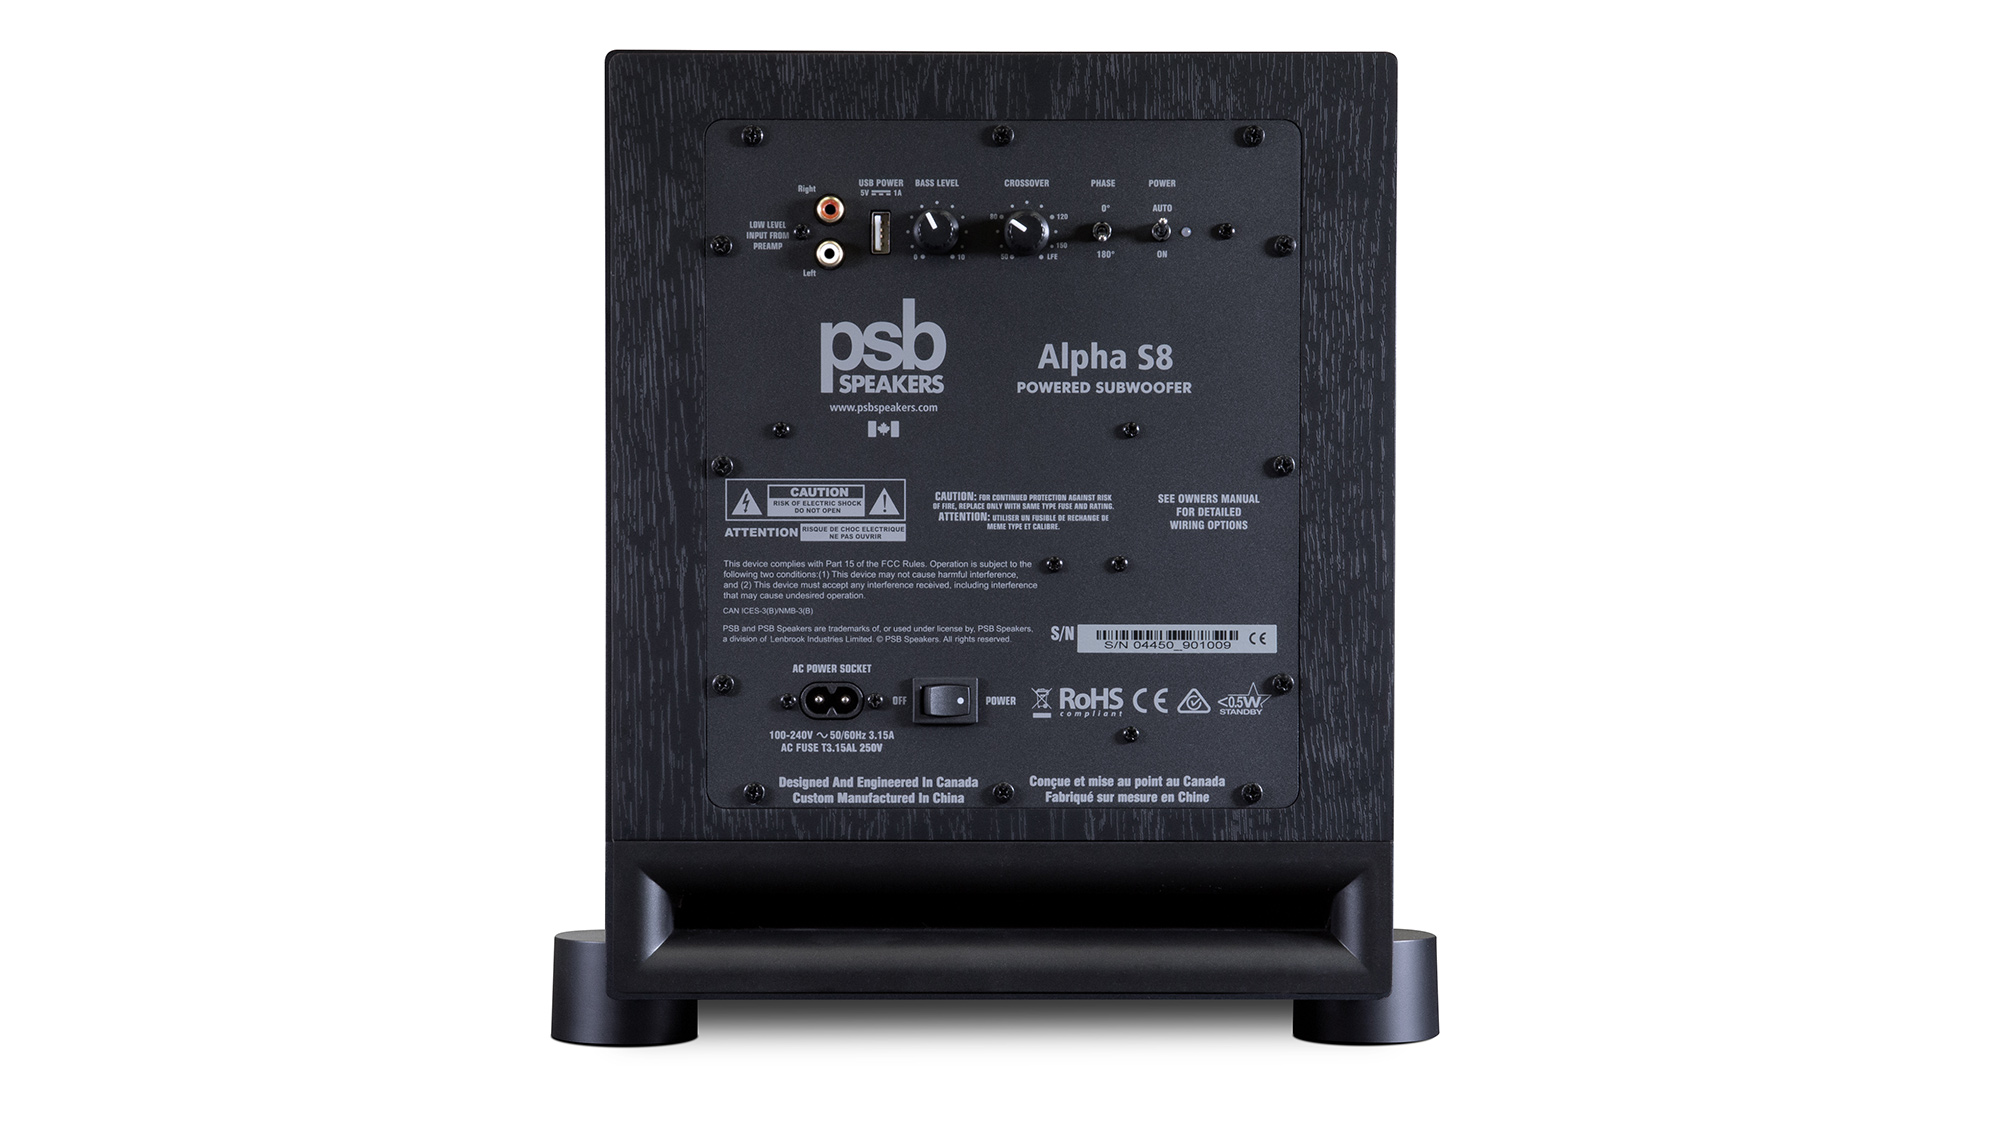 Rückseite des PSB Speakers Alpha S8